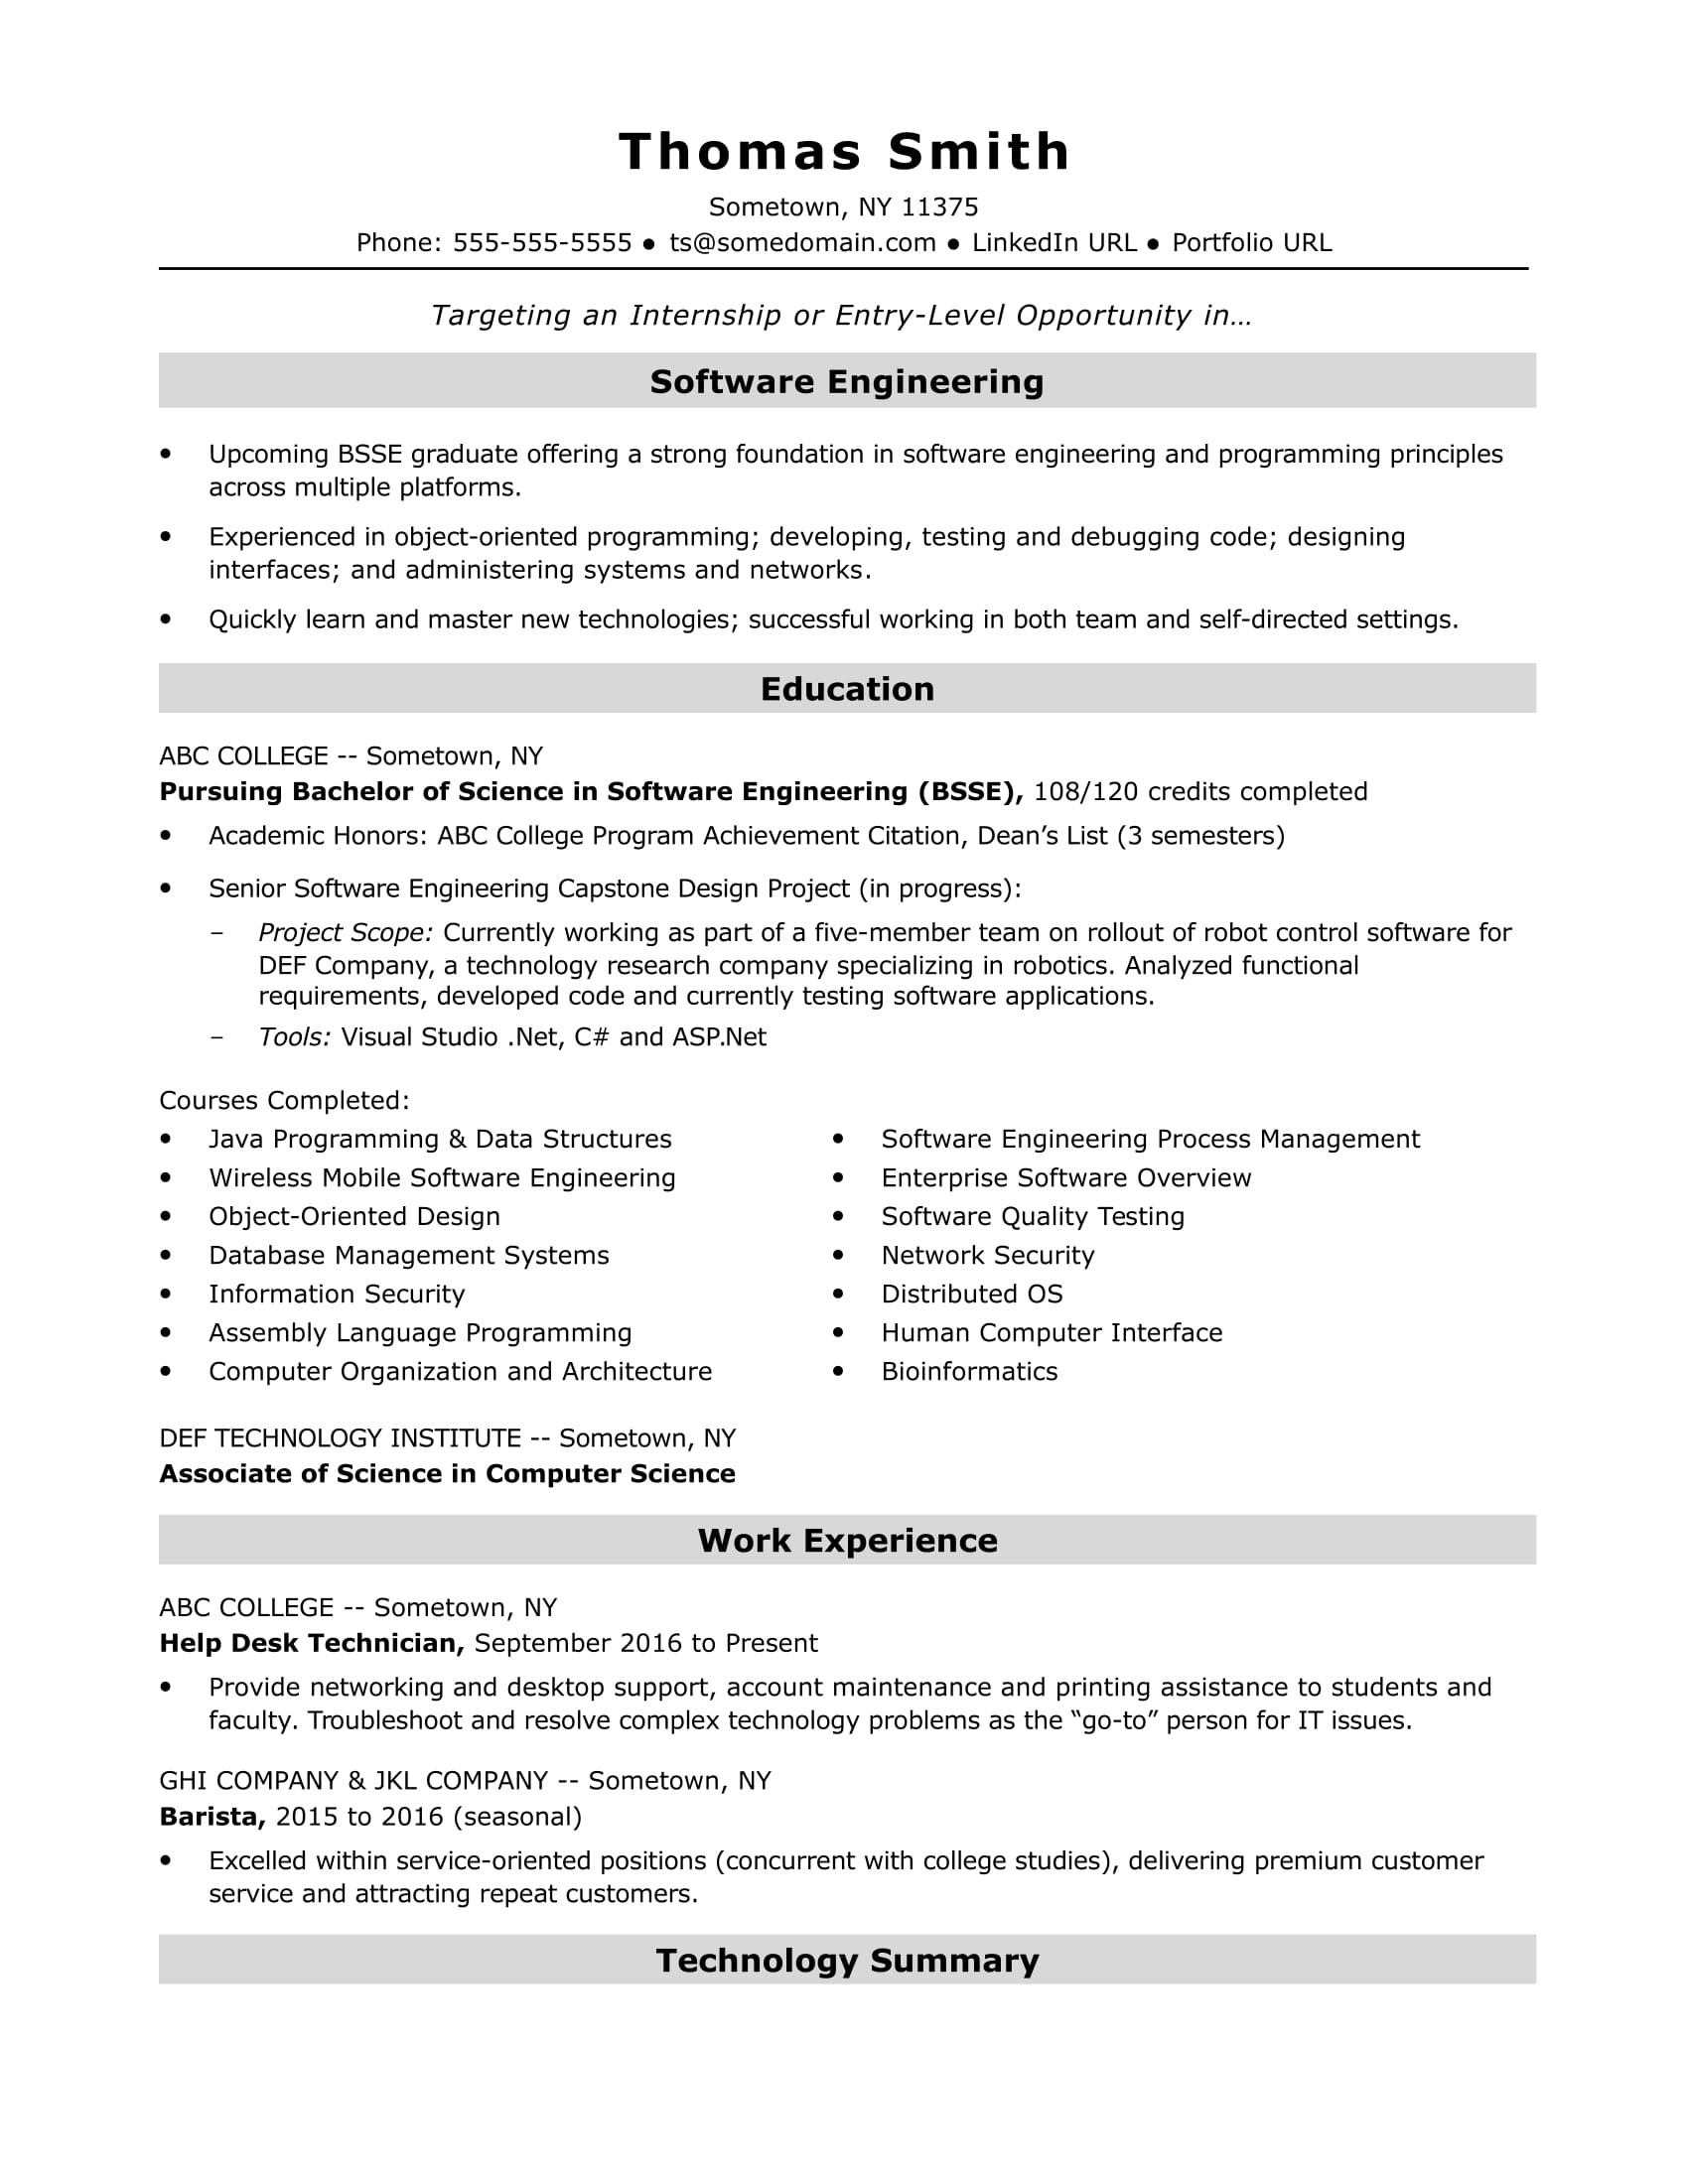 Sample Resume Of Help Desk Technician Transitioning to Data Entry Entry-level software Engineer Resume Sample Monster.com